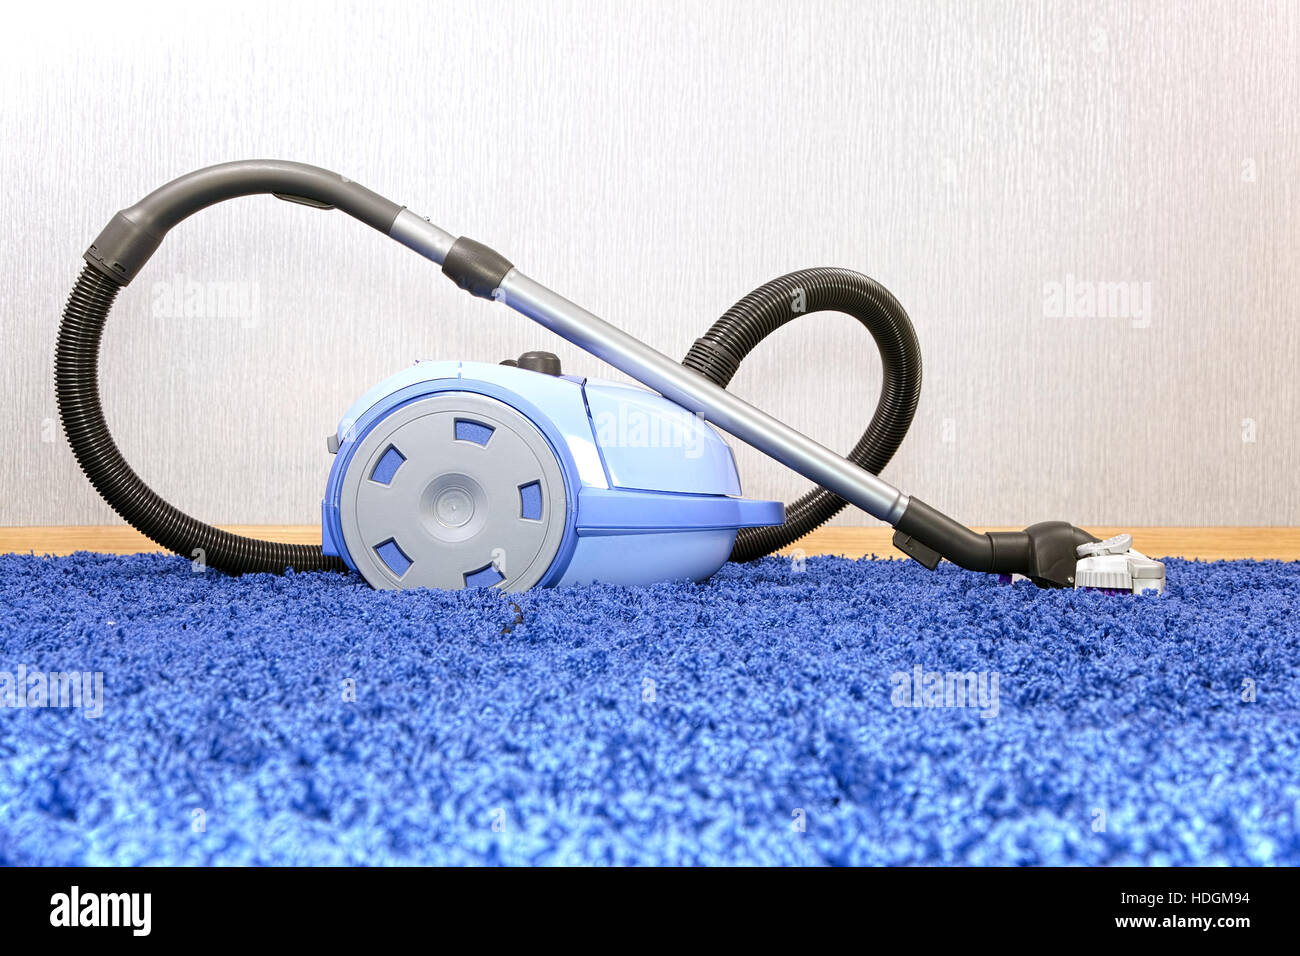 Potente aspiradora de pie sobre una alfombra azul.